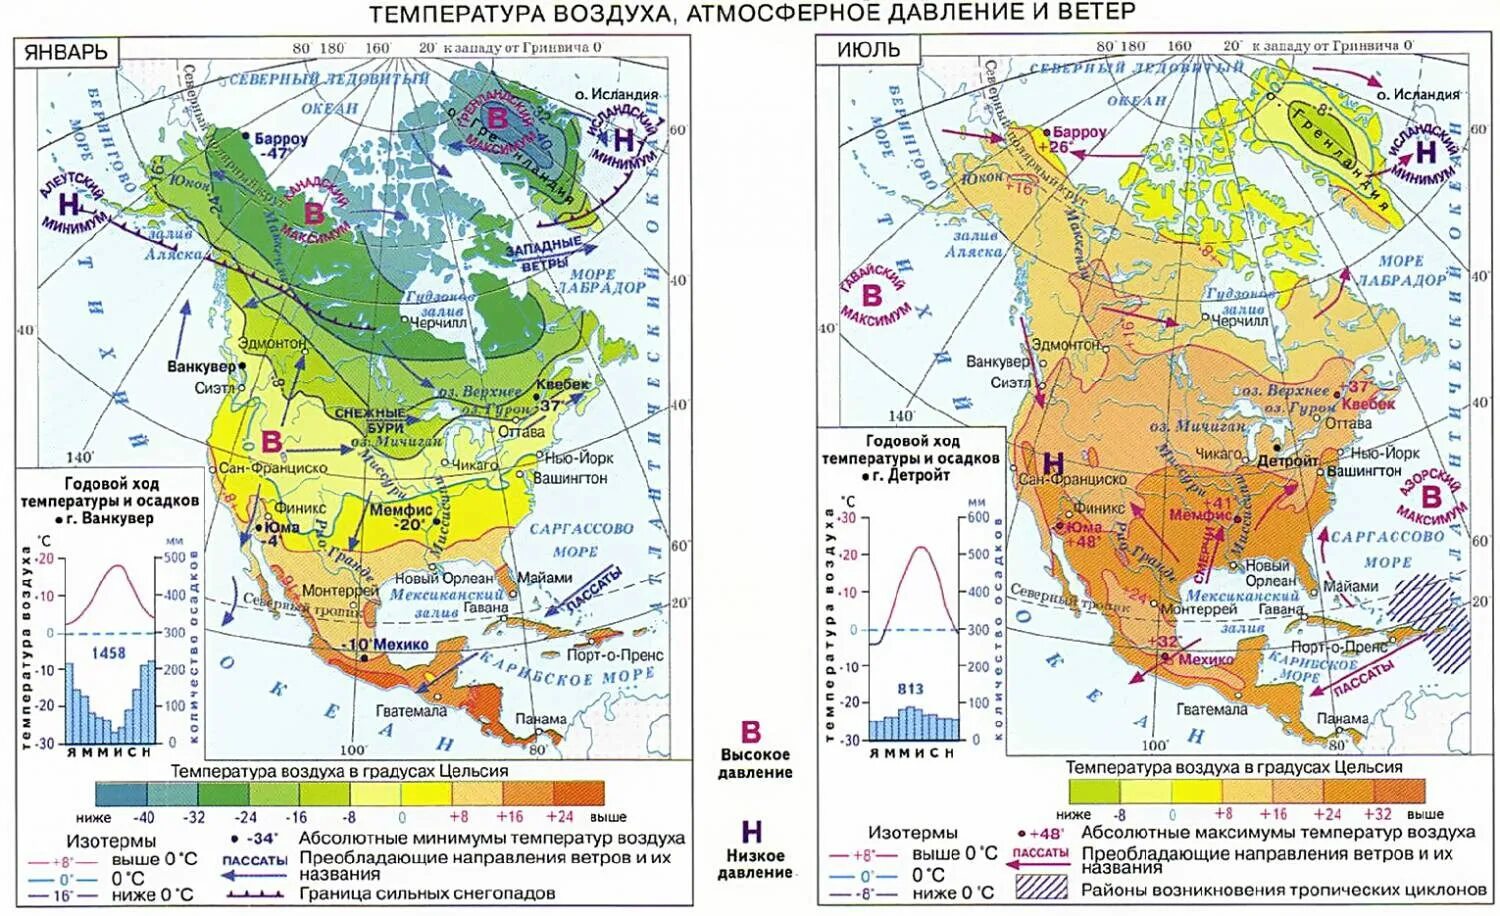 Туристический маршрут по северной америке. Климатическая карта Северной. Климатическая карта Северной Америки. Карта климатических поясов Северной Америки. Климатическая карта Северной Америки в атласе.